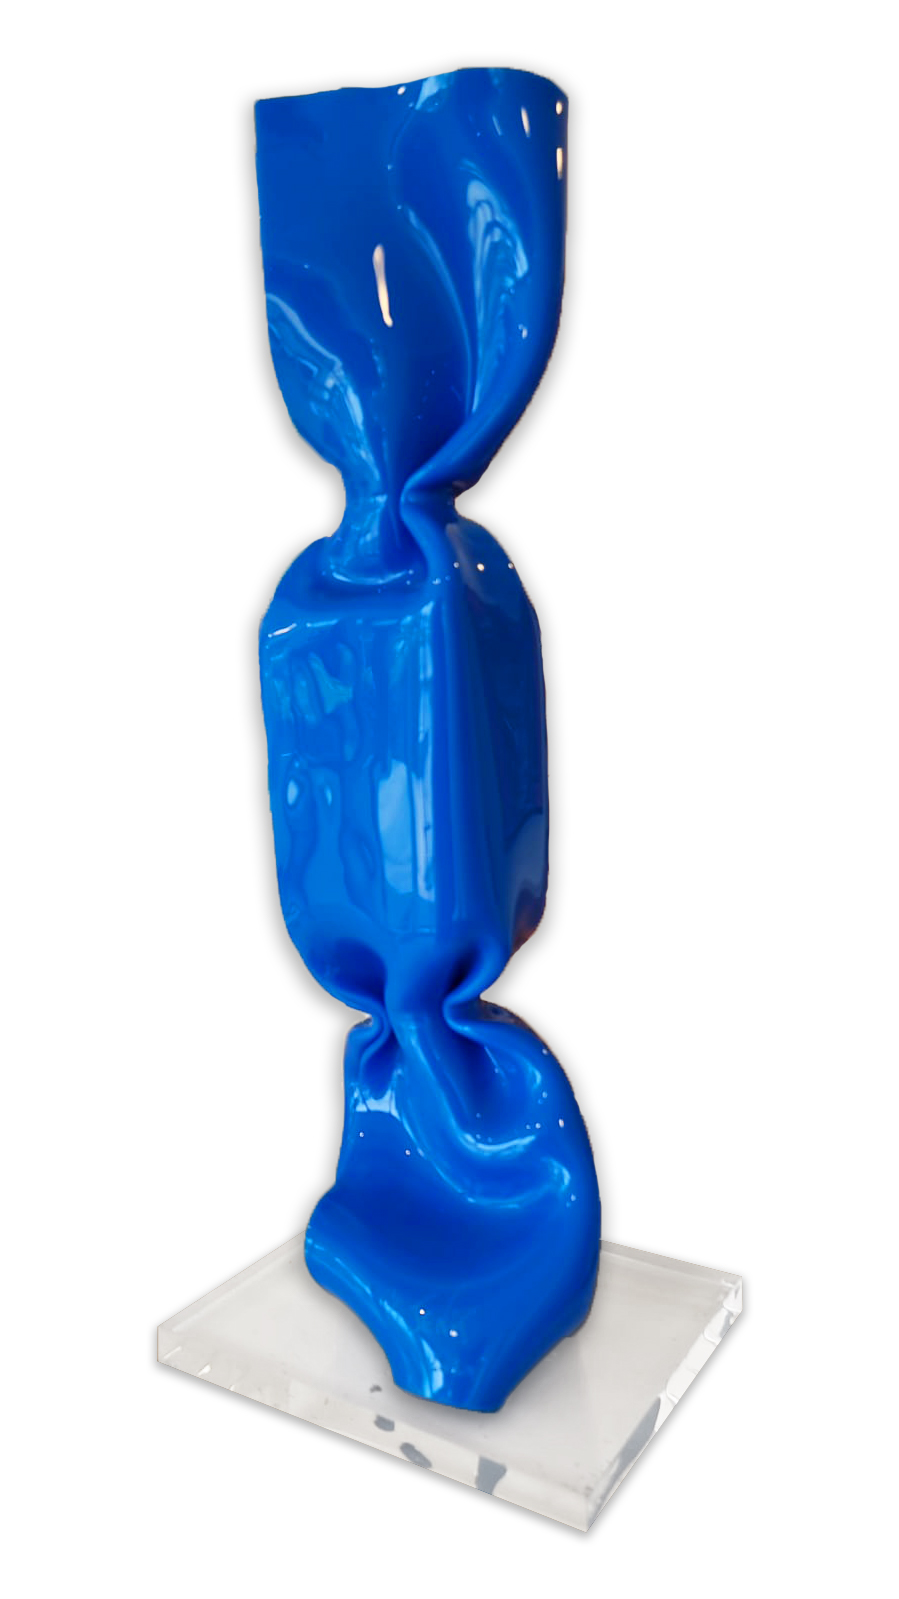 Laurence Jenk - Wrapping Bonbon Bleu Vernis 2020 Plexiglass 41 cm | 16 1/10 in Unique © Marciano Contemporary